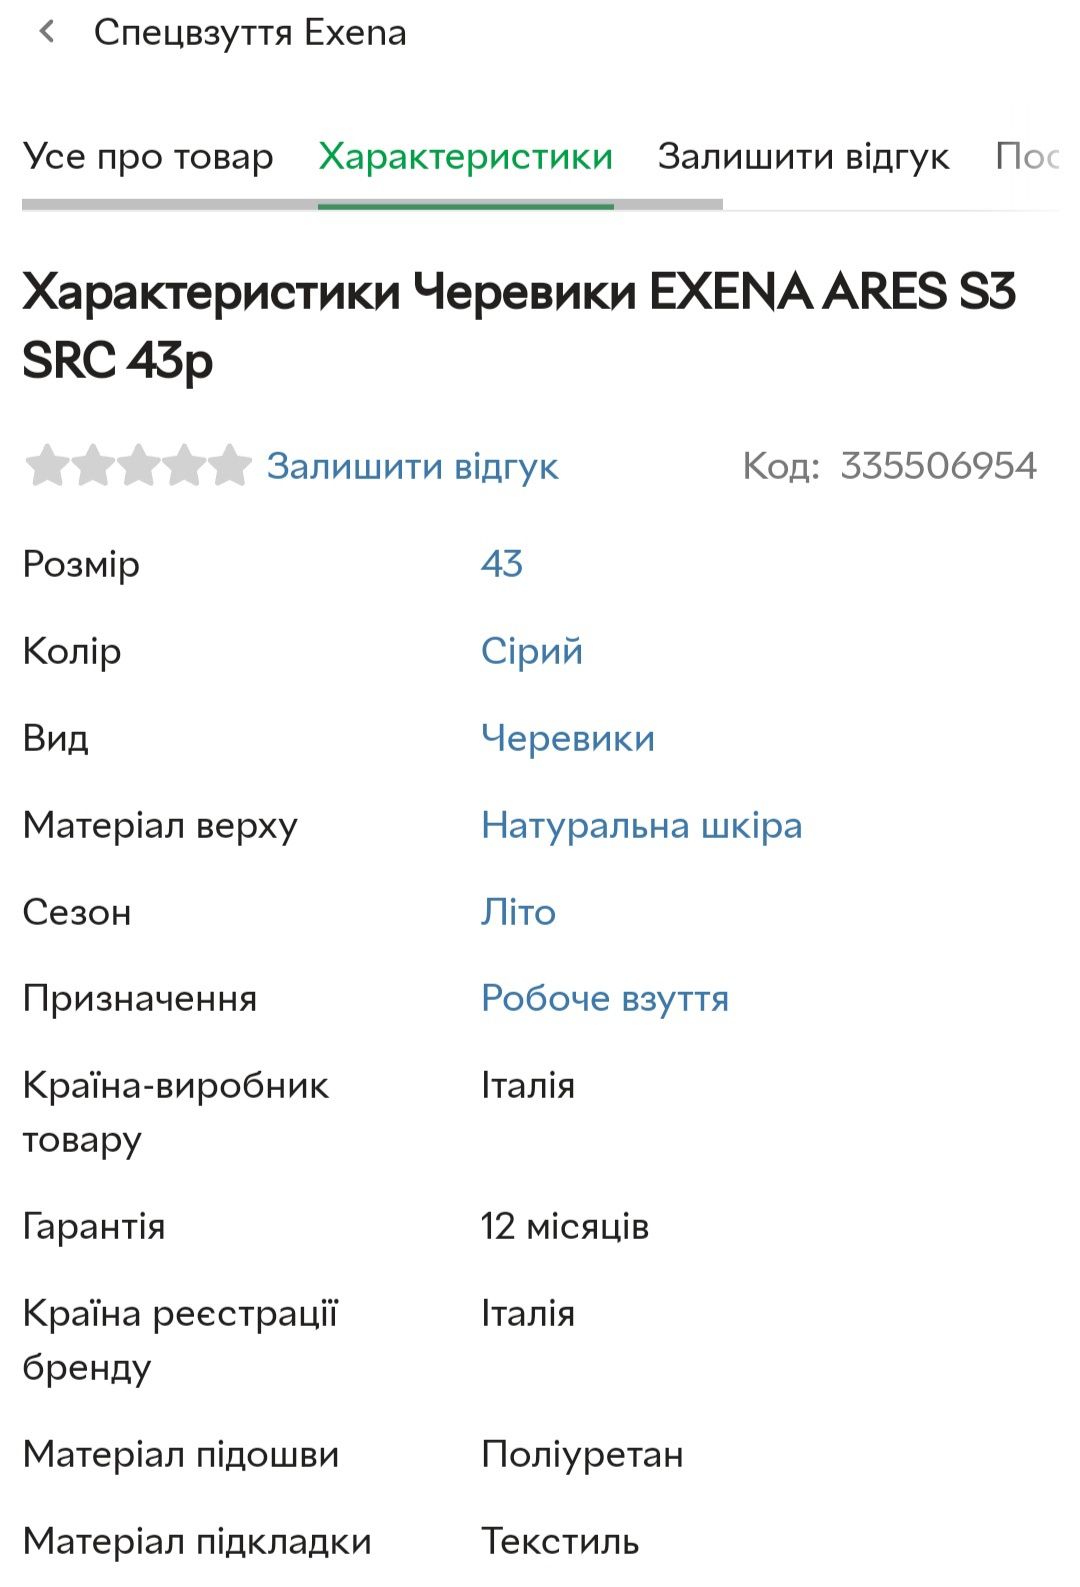 Спецвзуття черевики EXENA ARES S3 SRC 43р